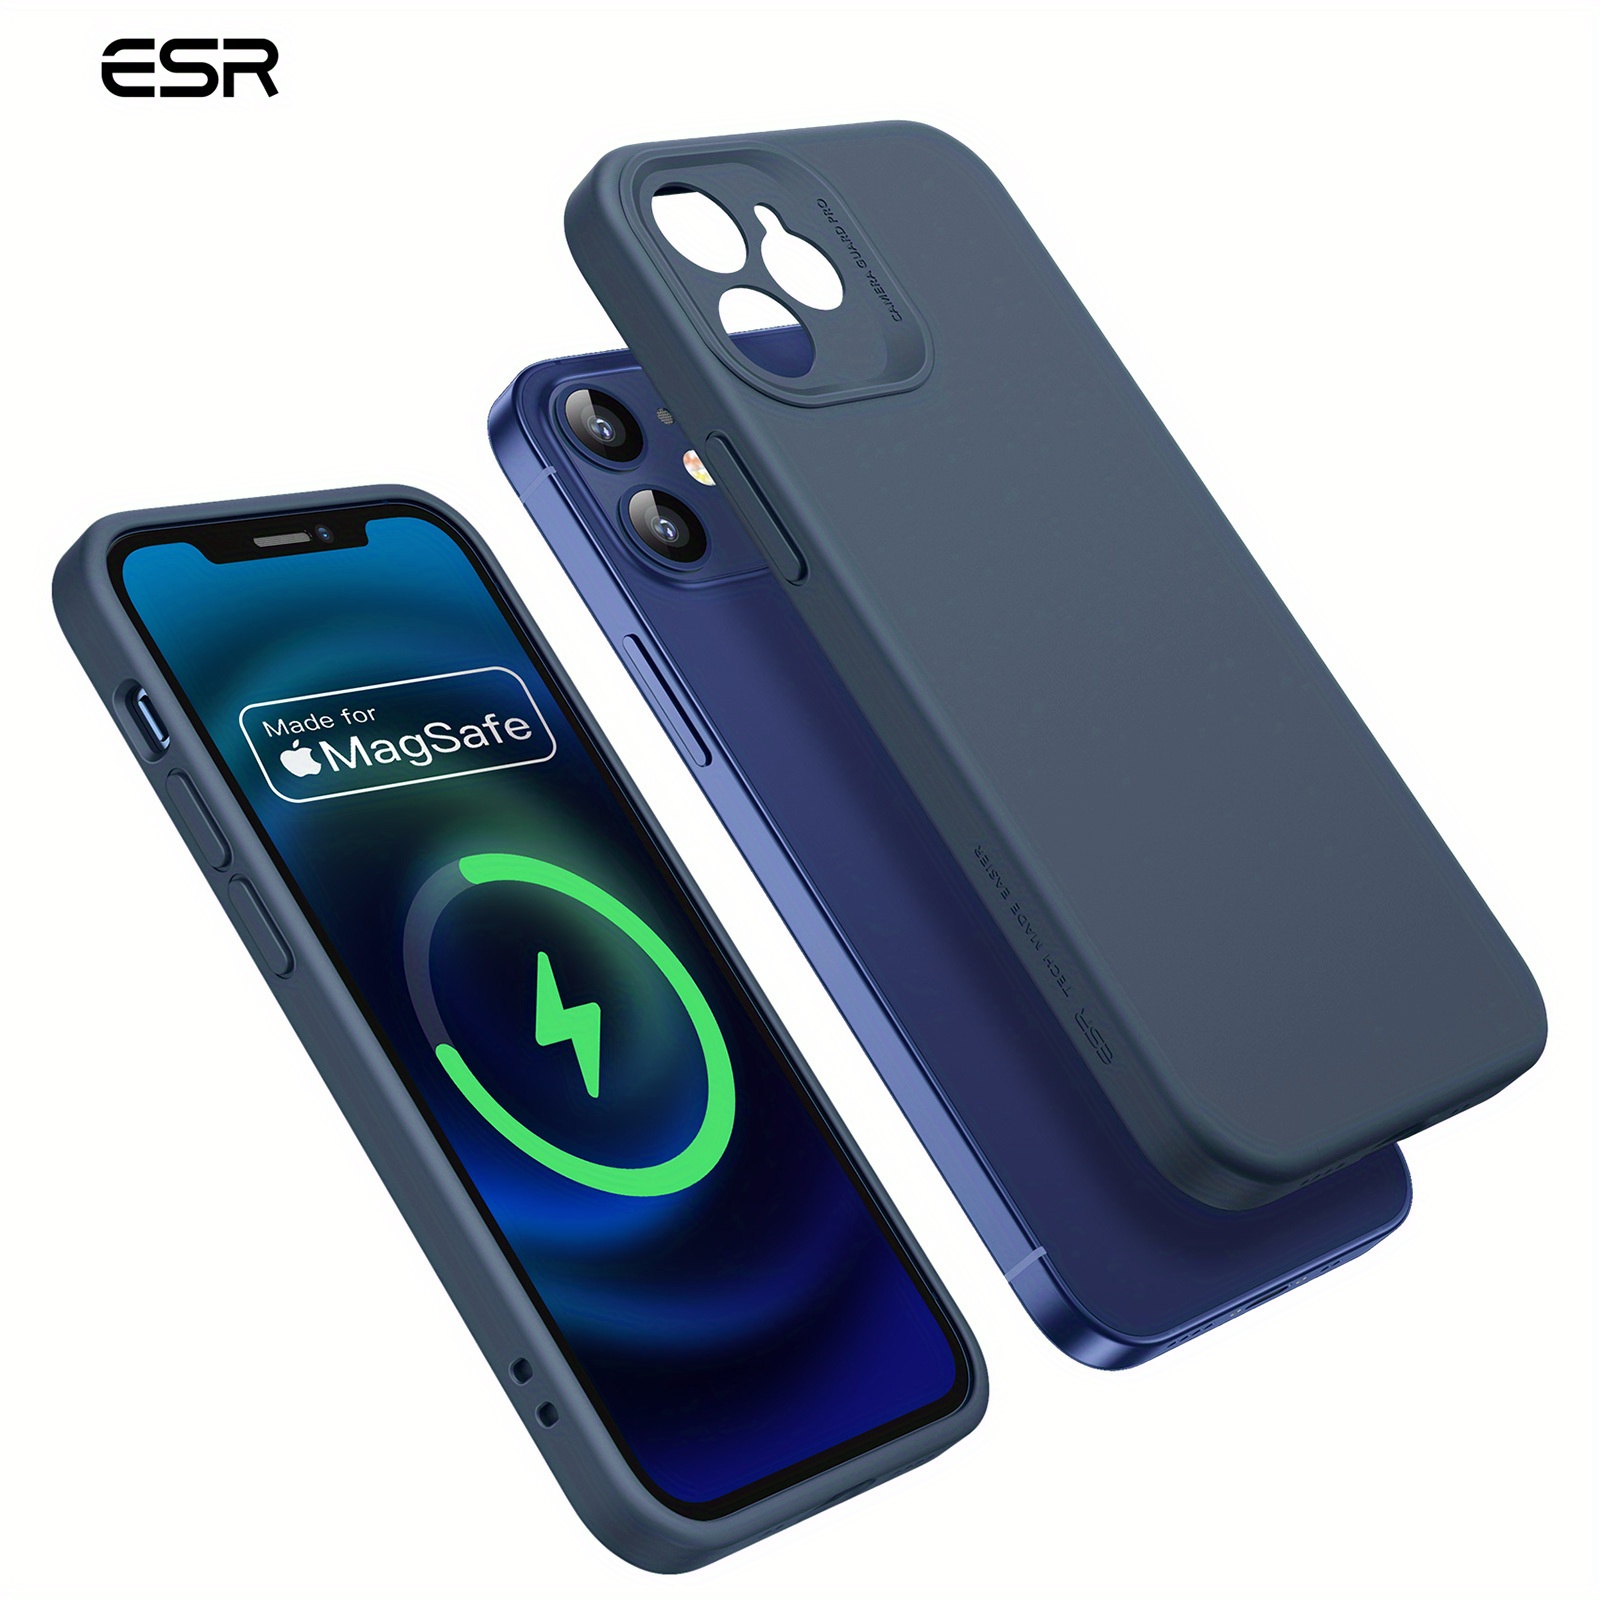 Funda ESR Hybrid case para iPhone 12 Mini